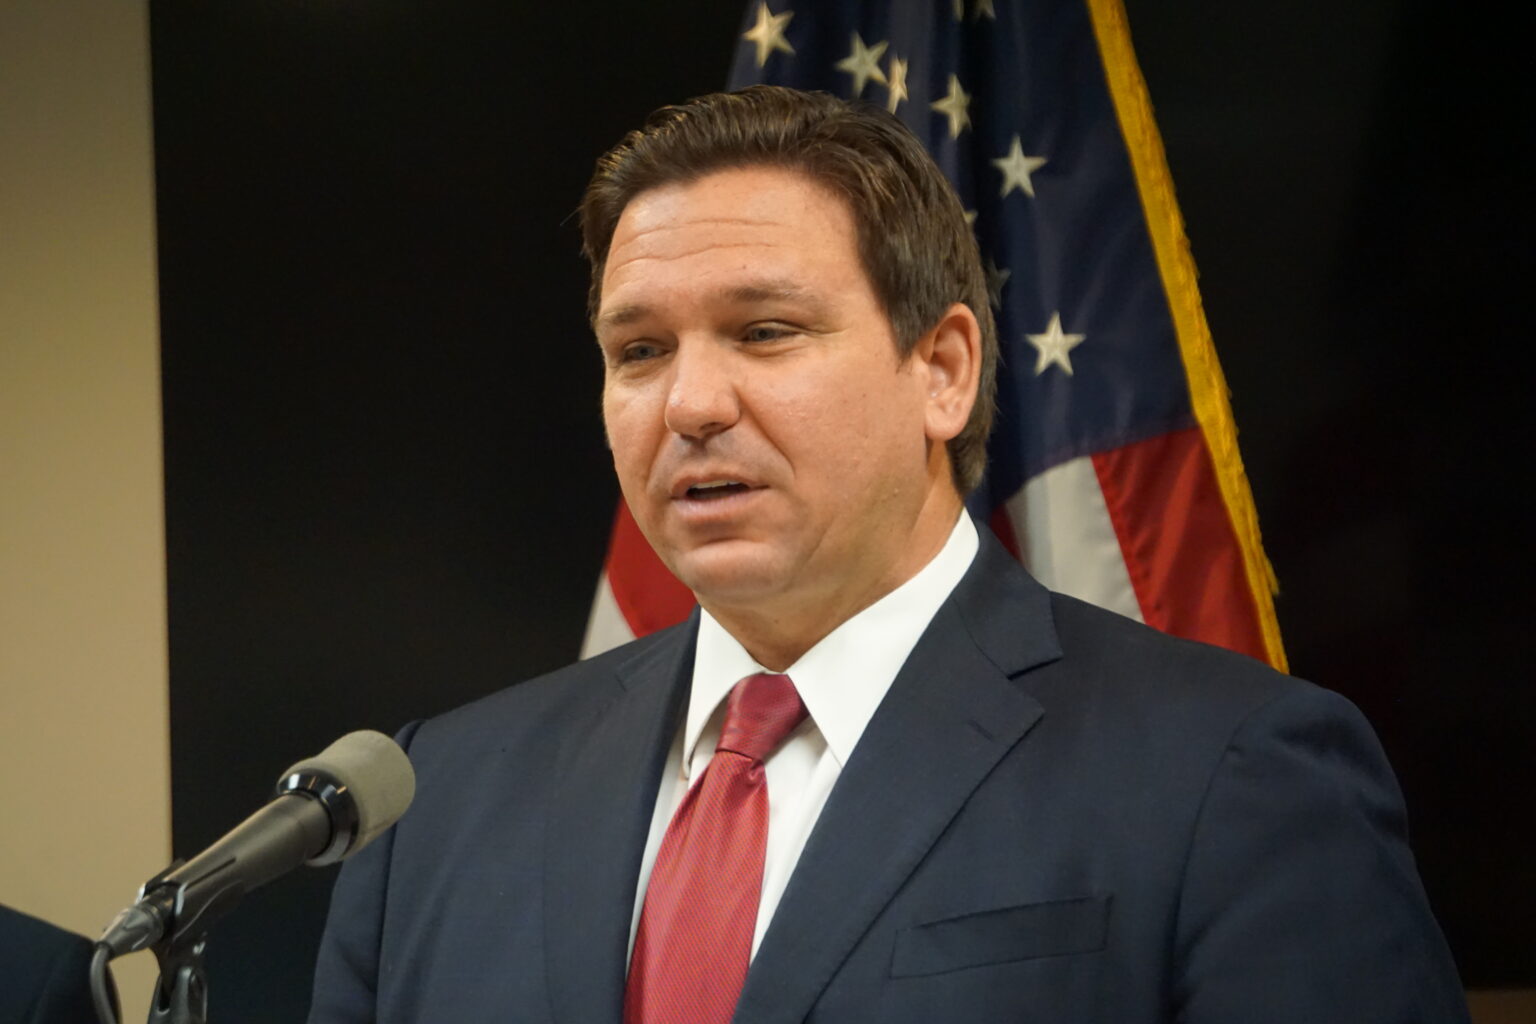 DeSantis Calls Florida 'a Law-and-Order State'